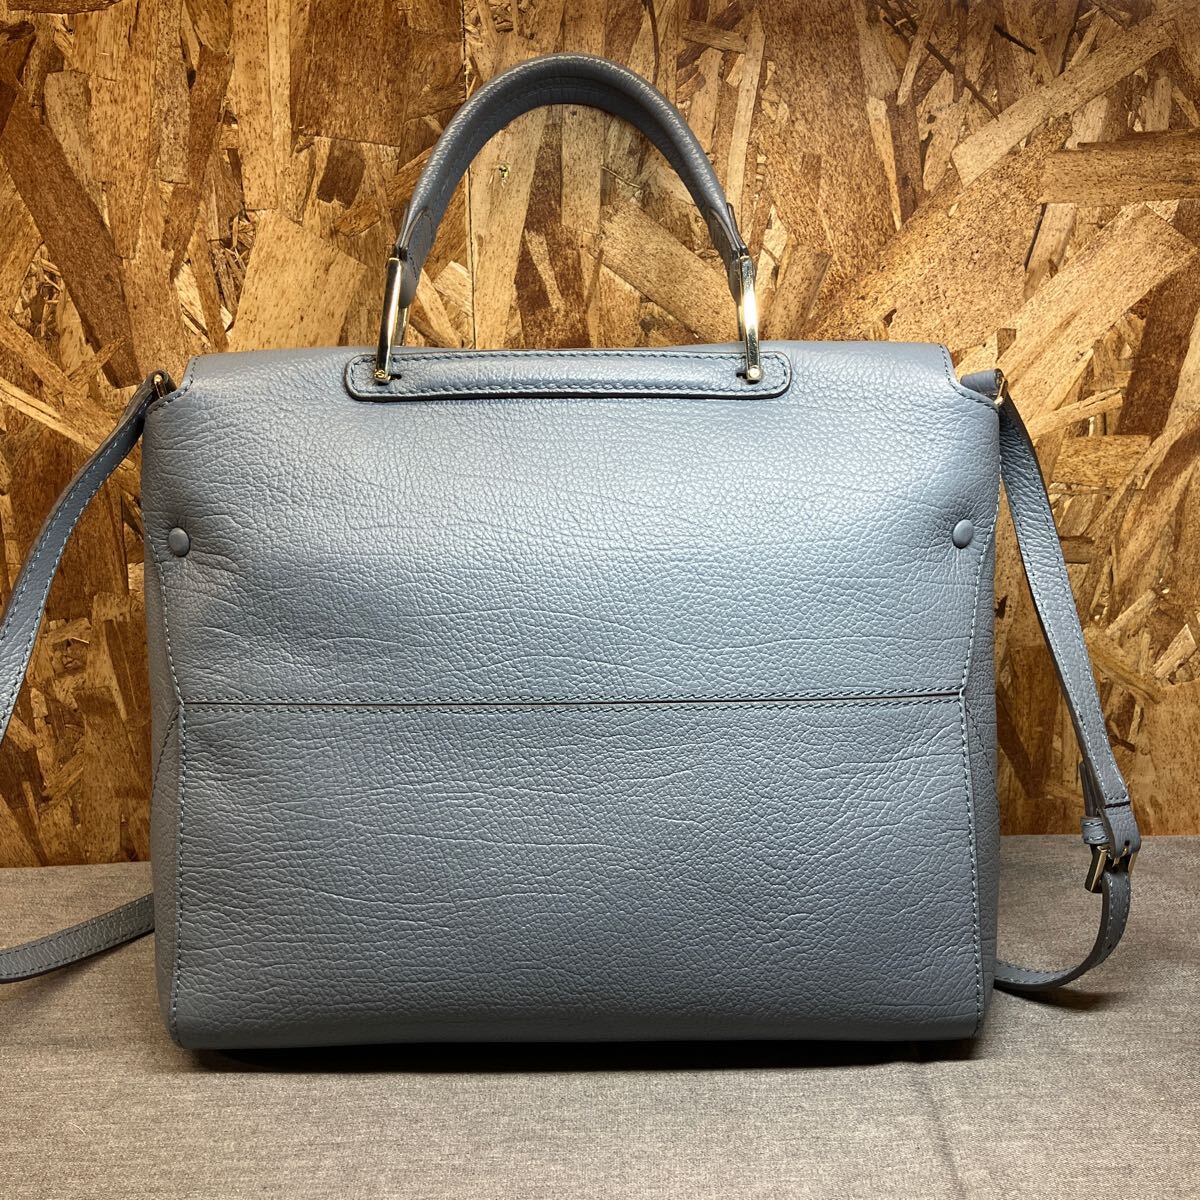  free shipping [N.1269]FURLA Furla arte -sia2way bag pale blue handbag leather shoulder bag bag 